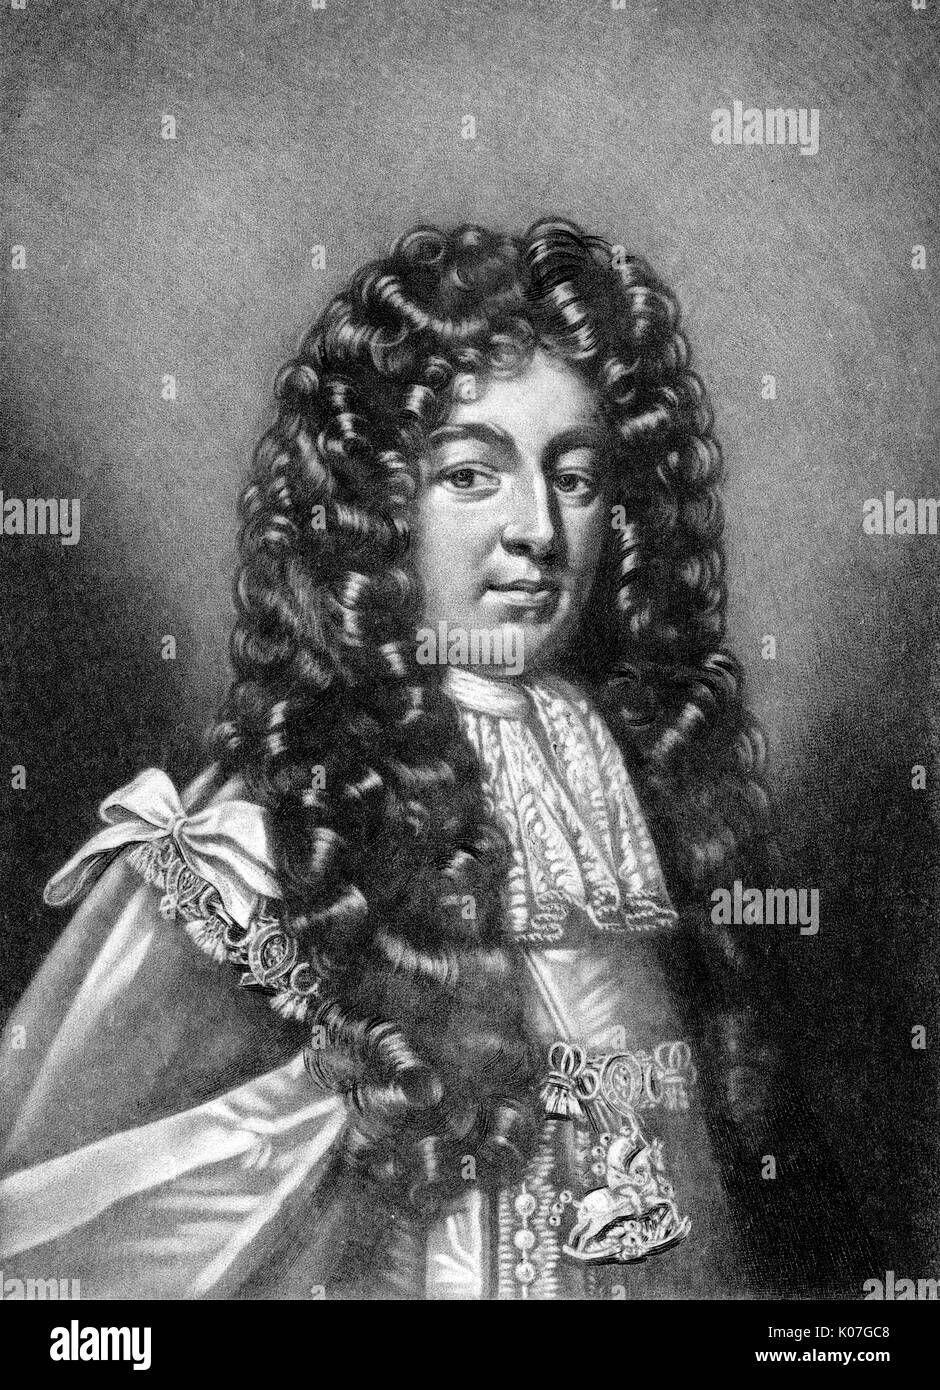 Charles Seymour (1662 - 1748), sixth duke of Somerset statesman       Date: Stock Photo